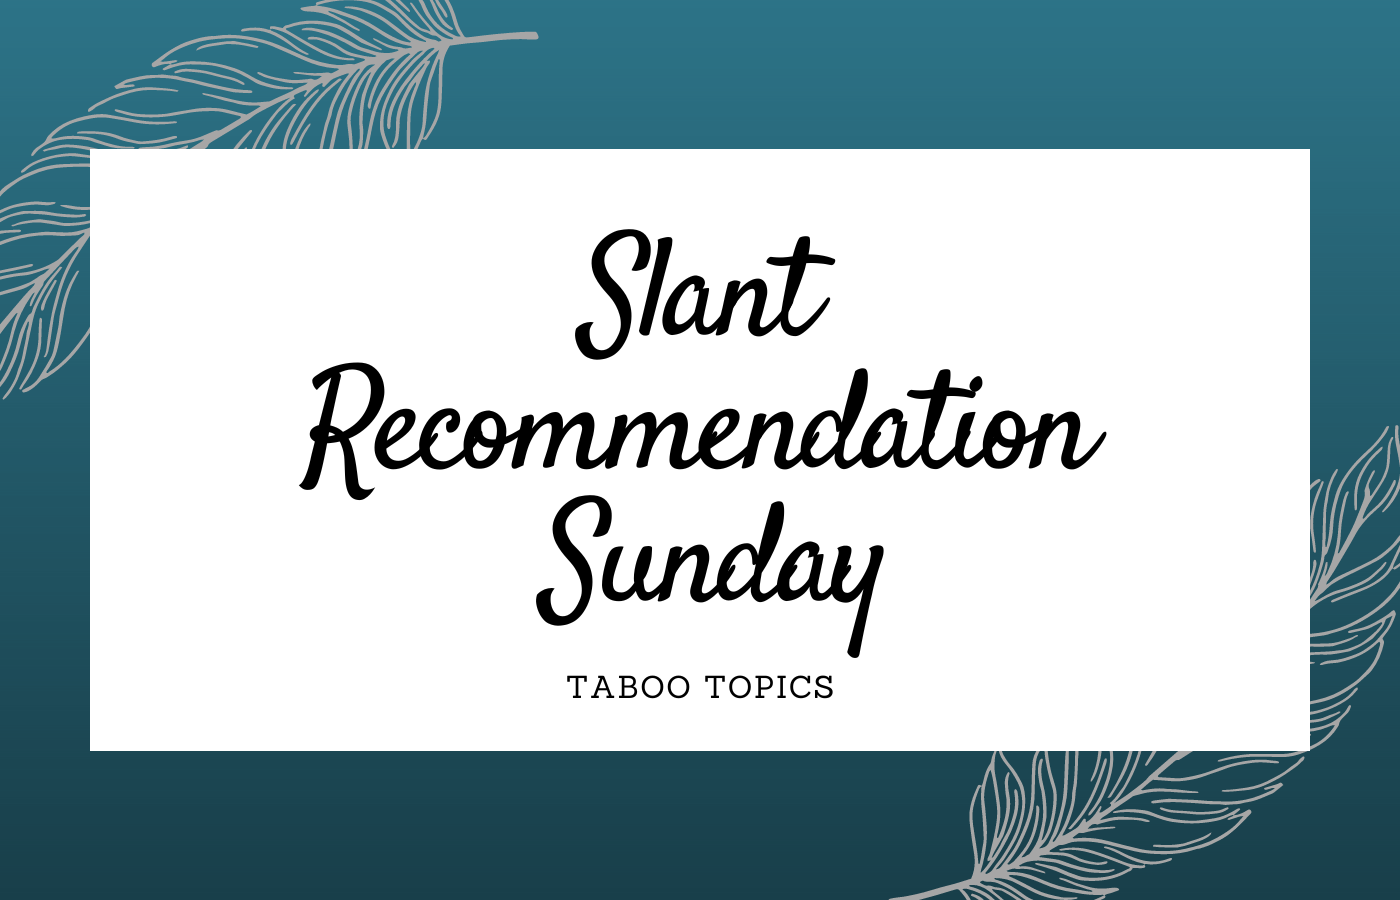 Sunday Slant Recommendation: Taboo Topics